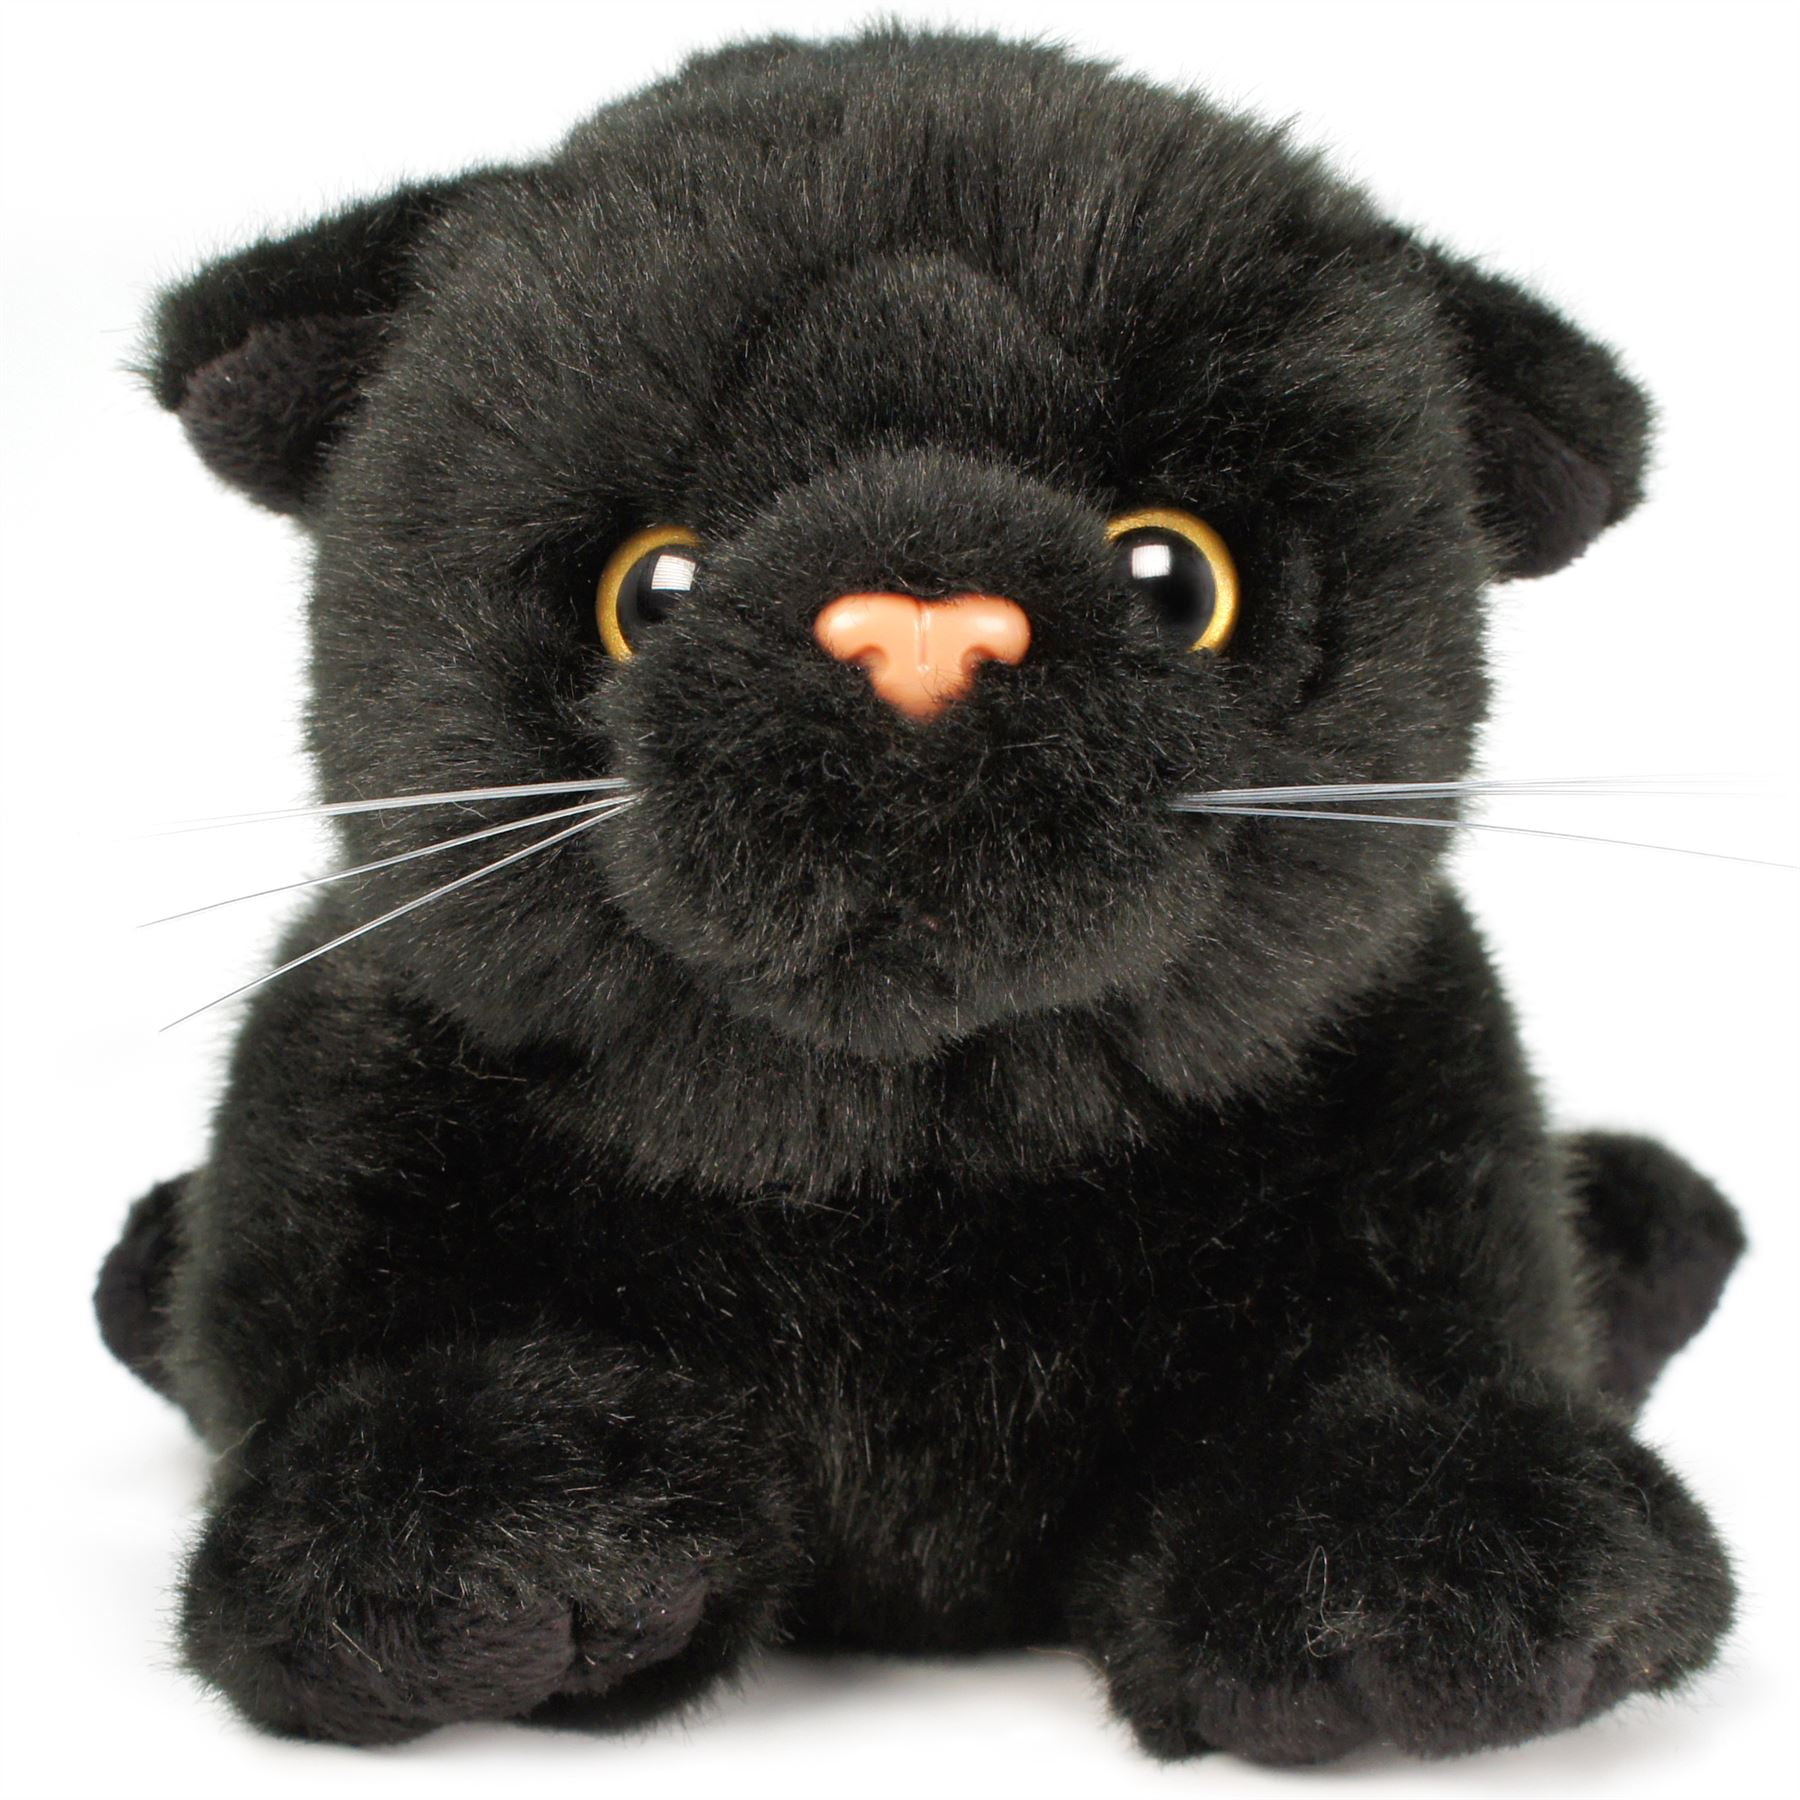 black cat stuffed animal walmart